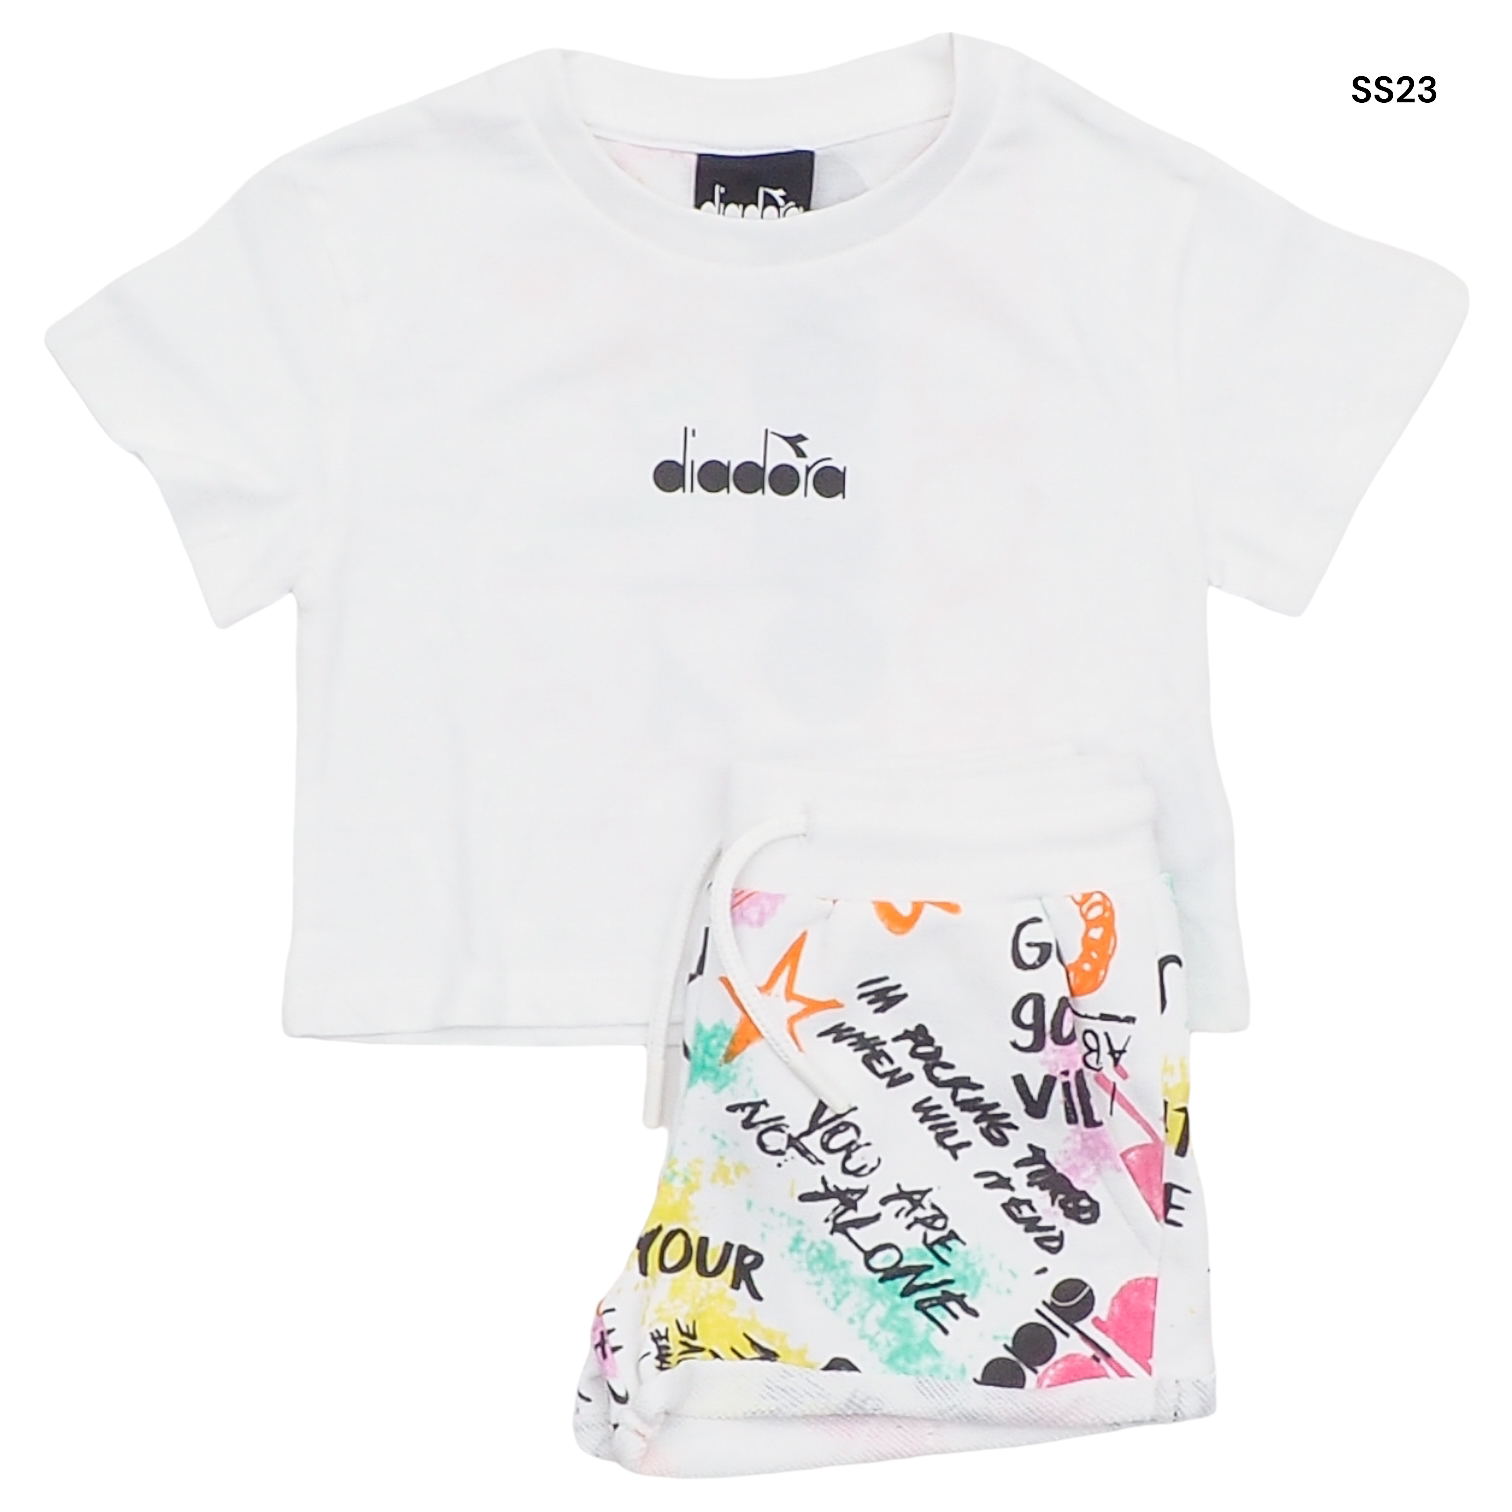 Completo t-shirt bianca + short con logo per neonata e bambina